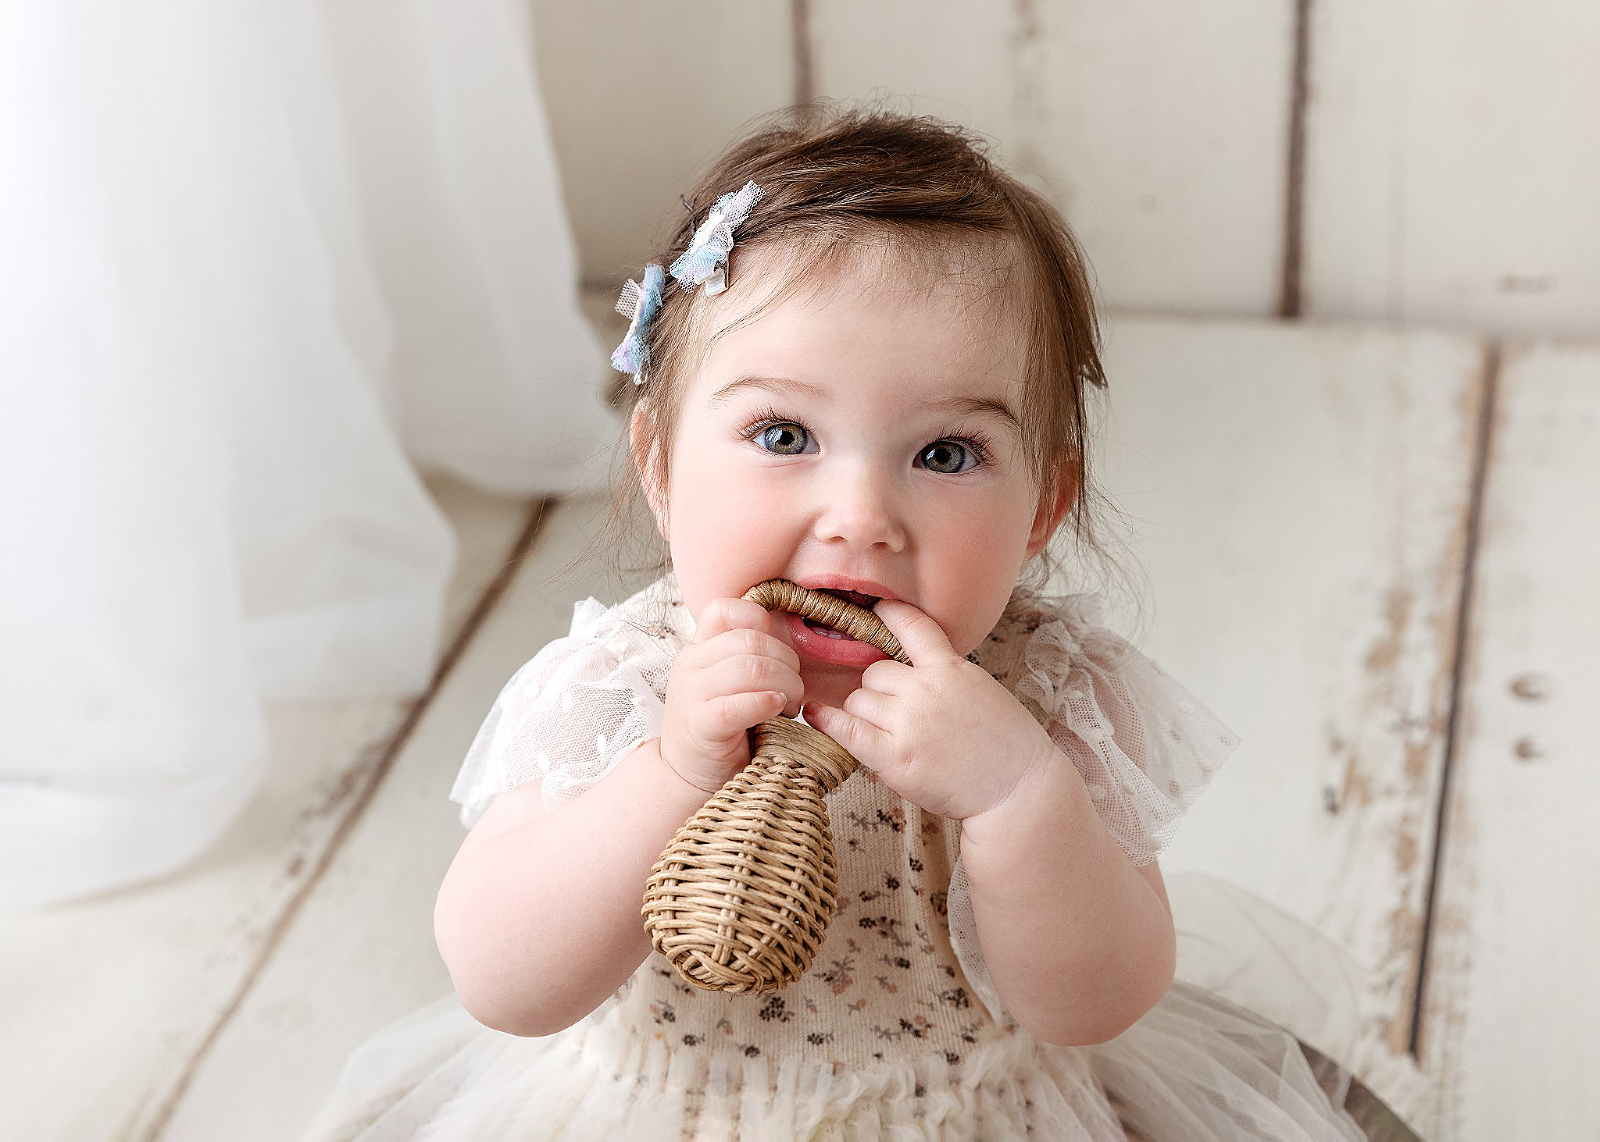 Baby girl sitter/milestone photo shoot in studio Hereford, Herefordshire